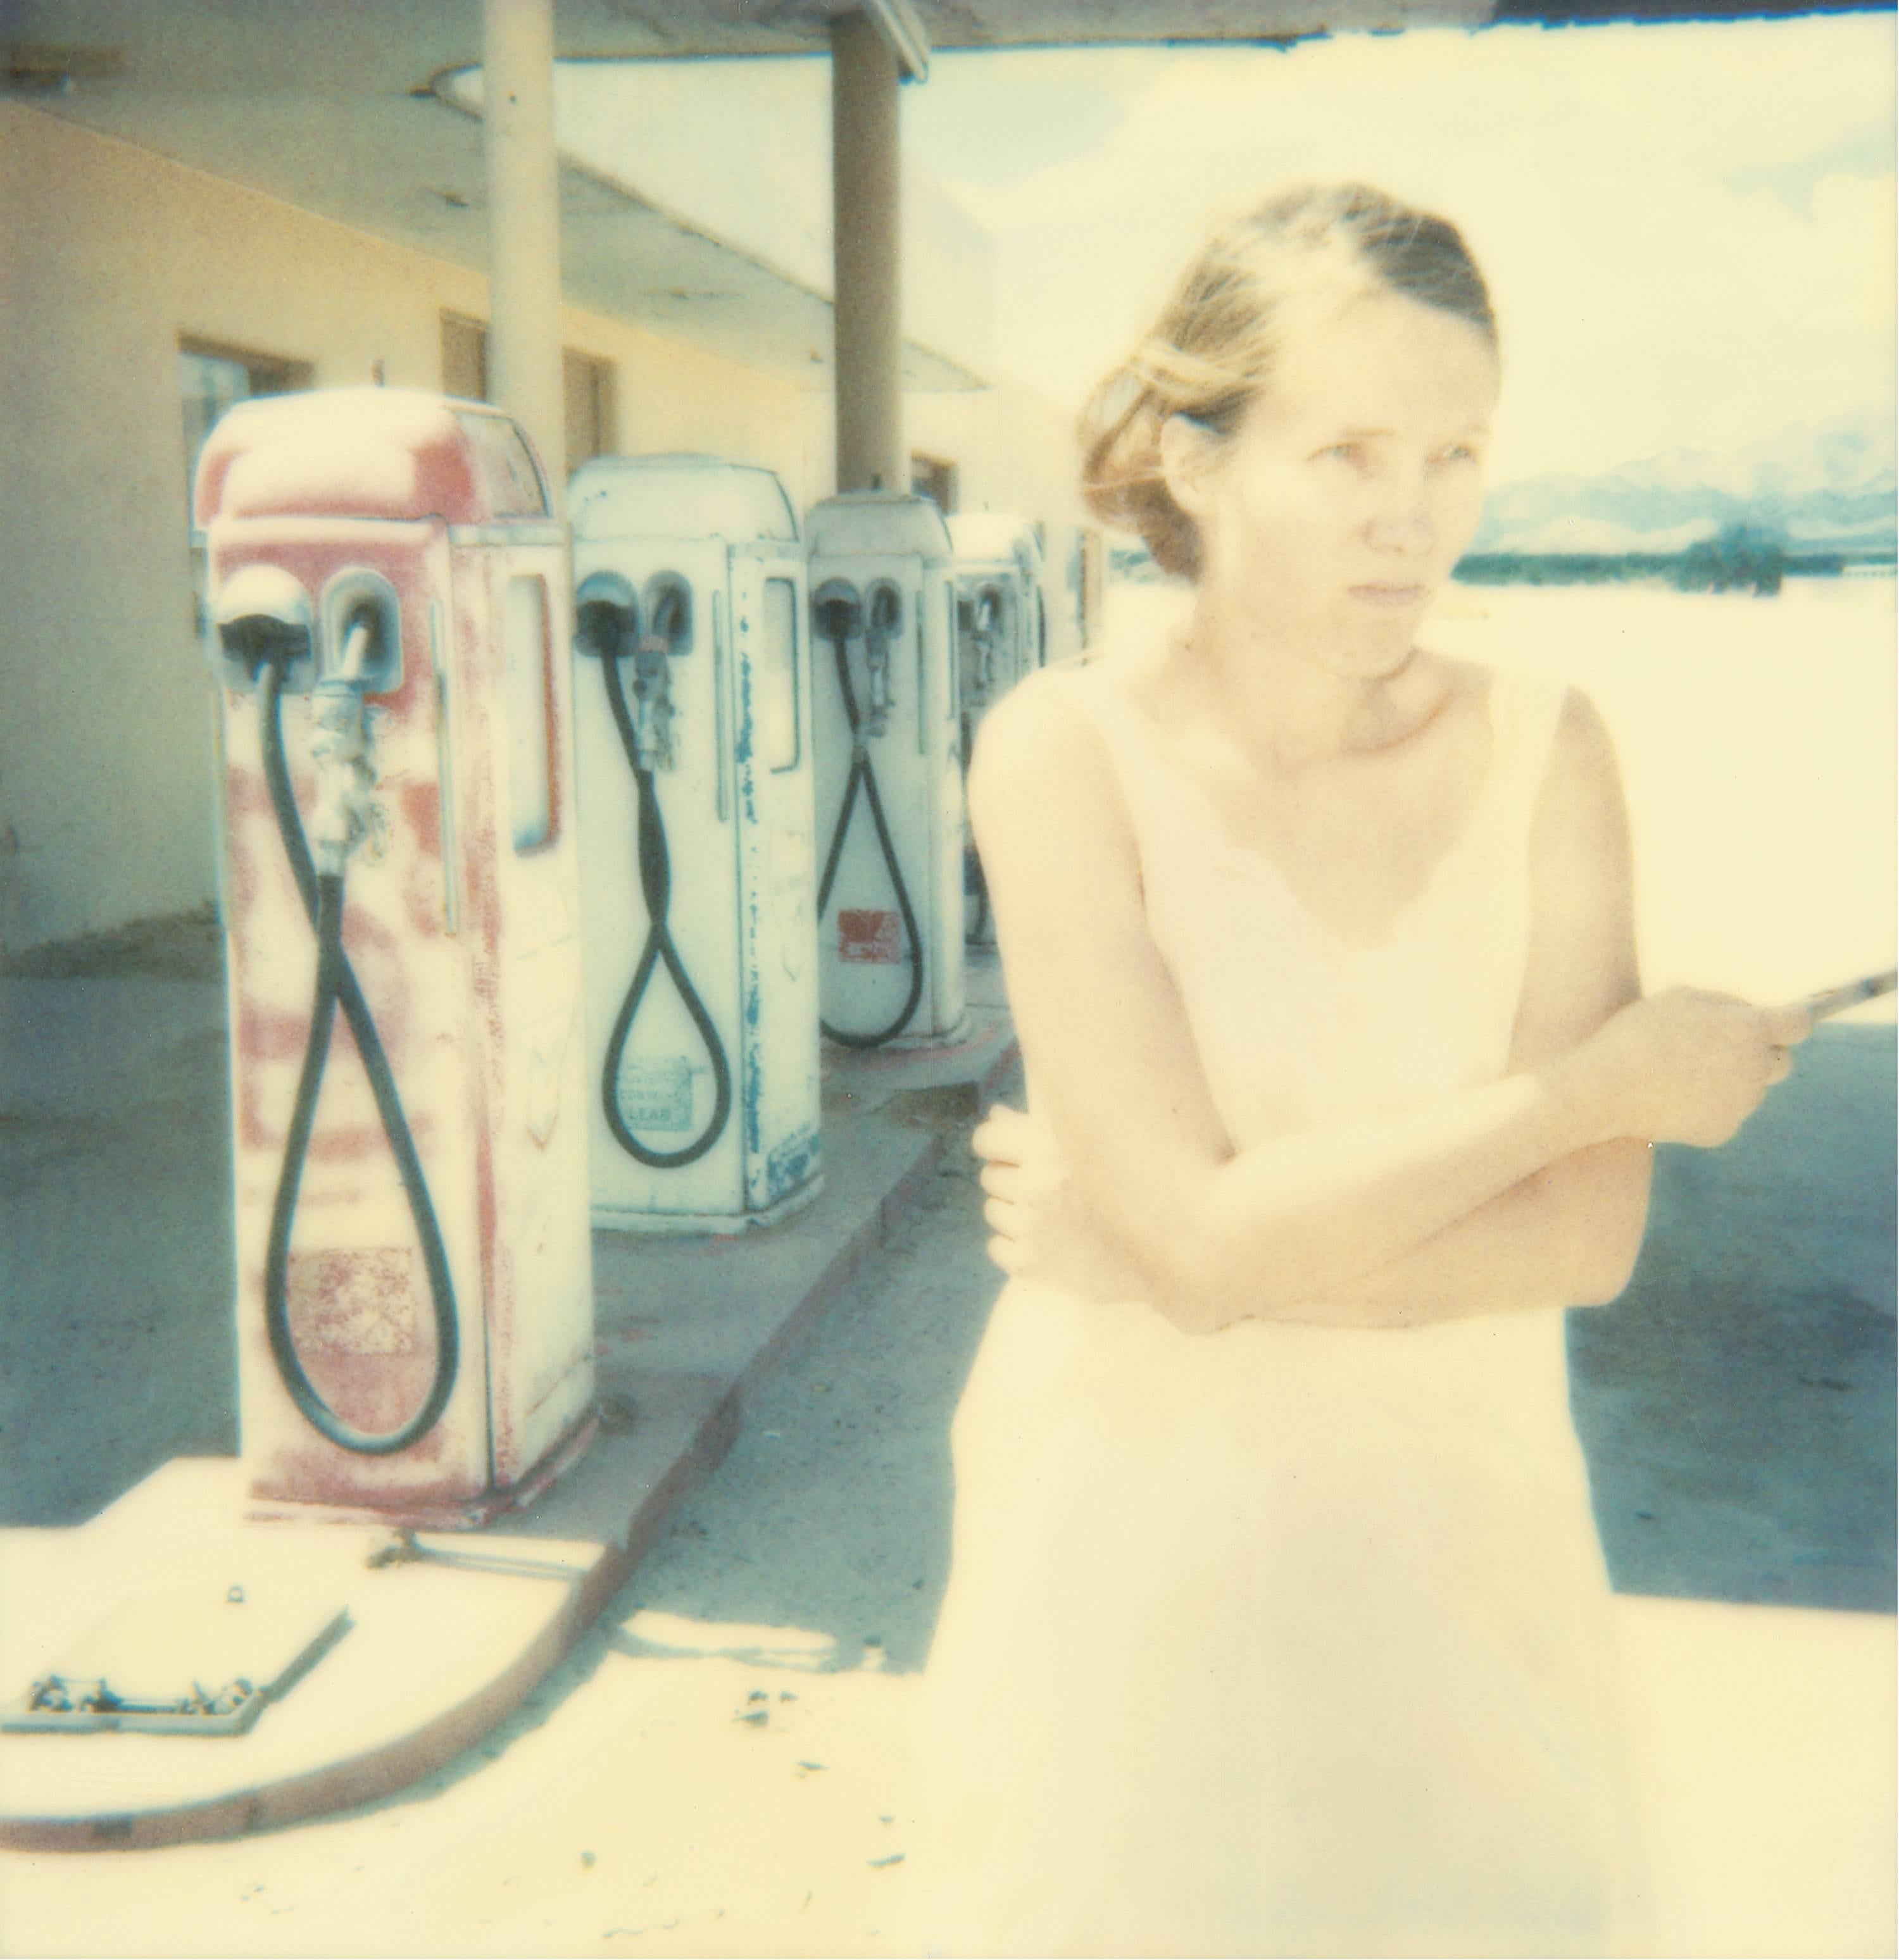 Gasstation (triptych) - Polaroid, Contemporary, 21st Century, Color, Portrait - Photograph by Stefanie Schneider